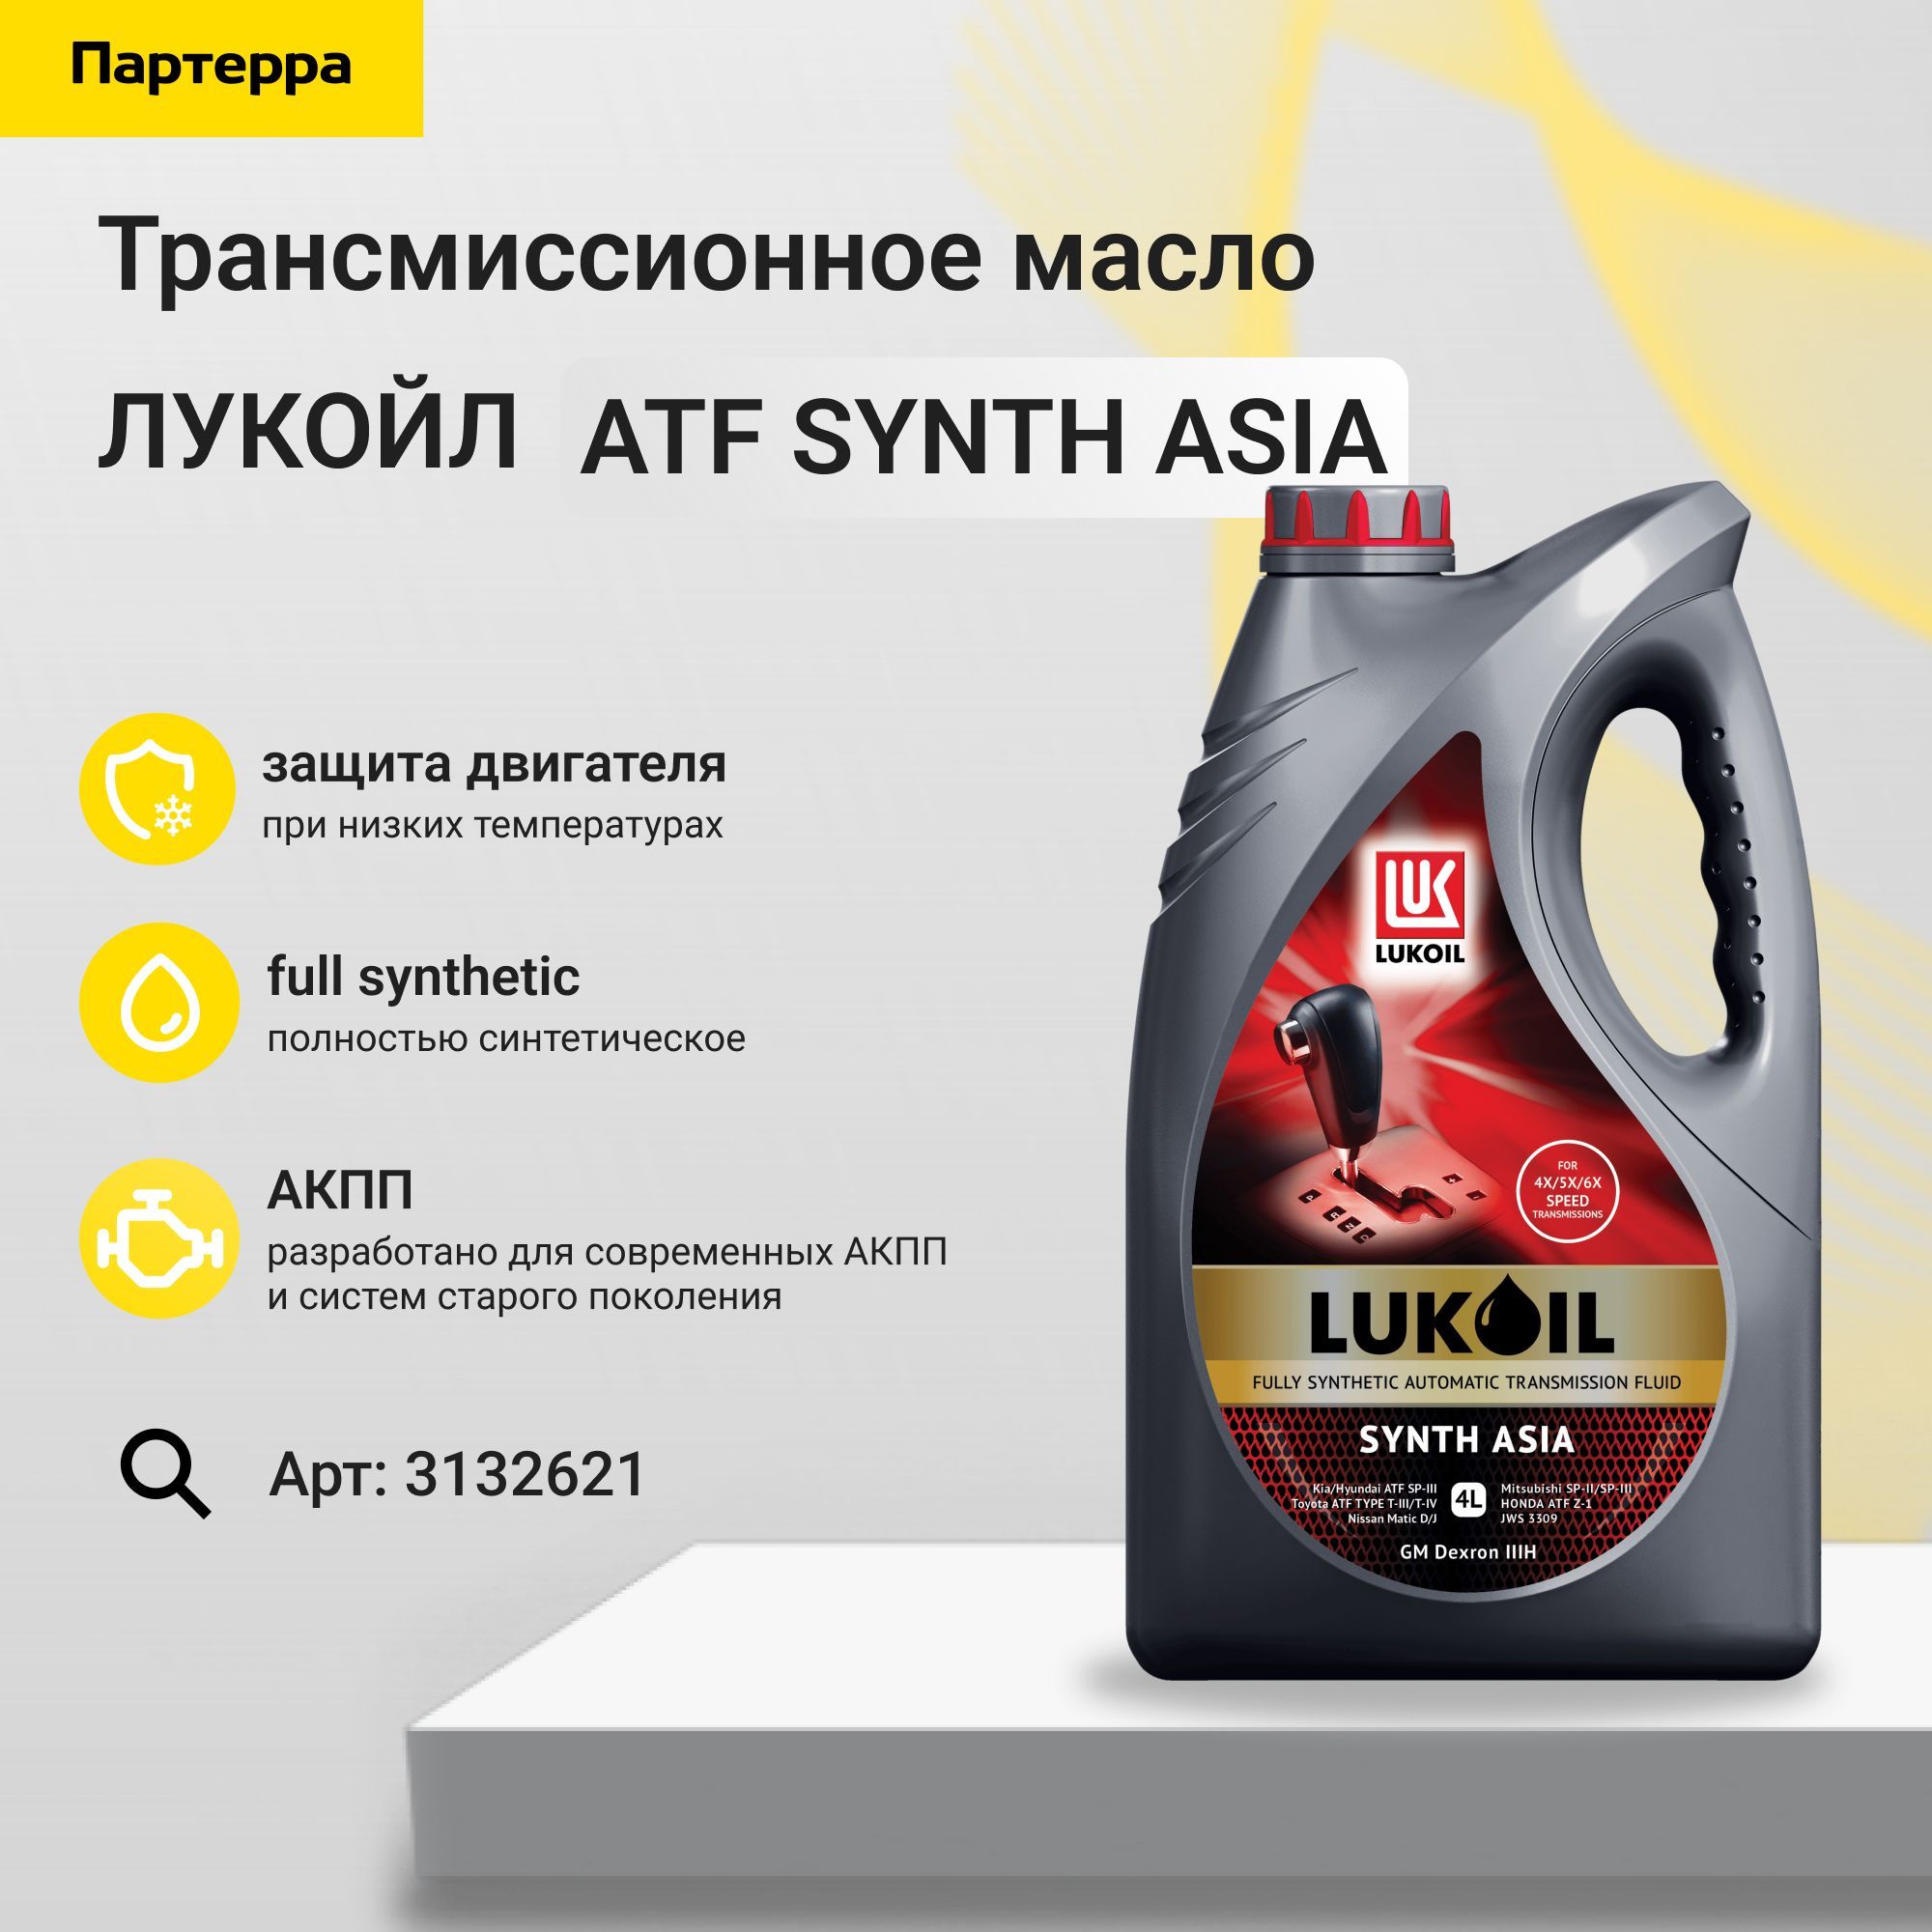 Лукойл synth asia. Трансмиссионное масло CVTF НК.4л Lukoil 3146925. 3261423 Лукойл масло спецификация DCTF. 3132621. NGN -6 ATF характеристики цвет.